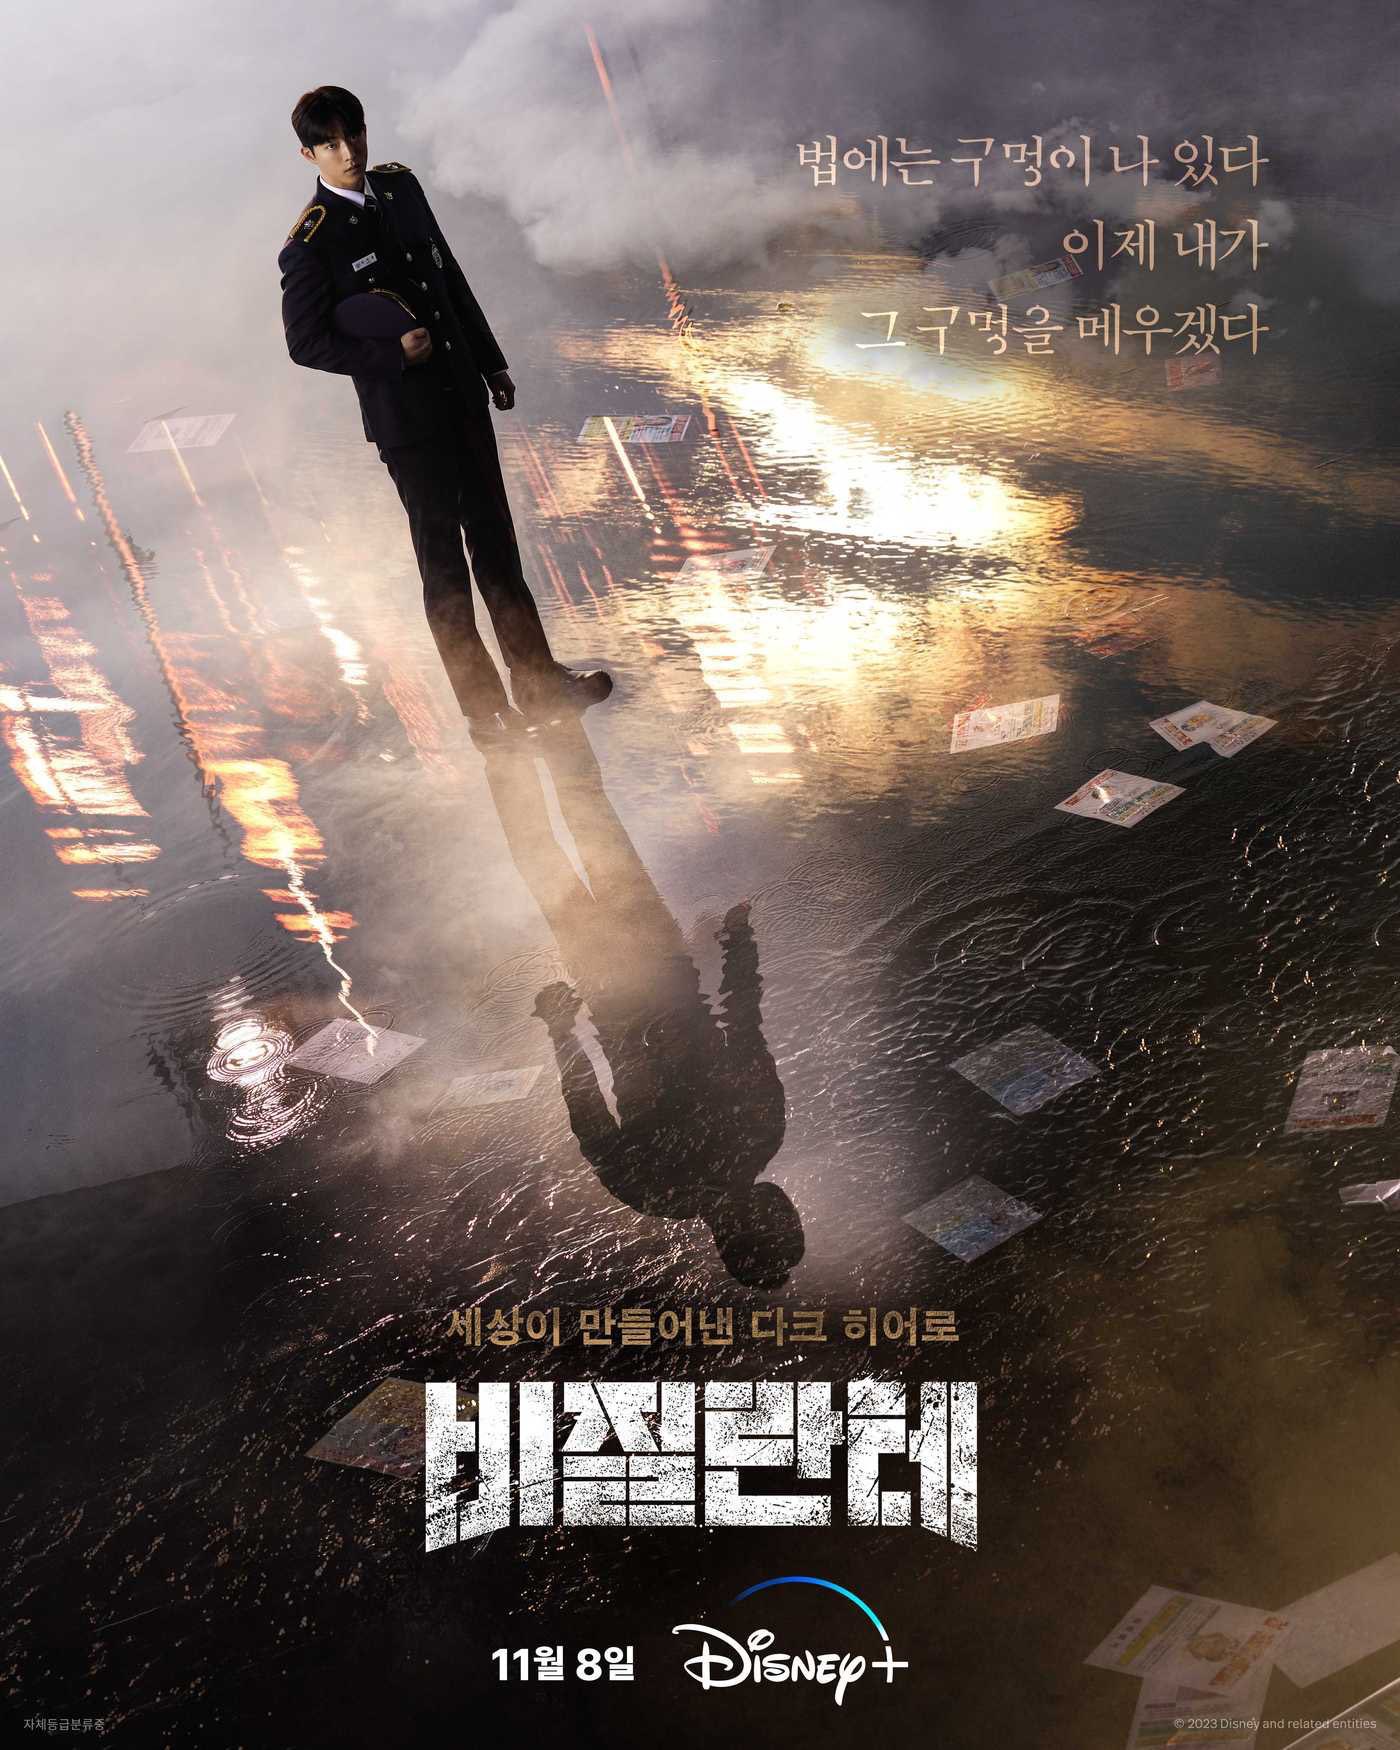 Tayang 8 Nov, Drama Baru Nam Joo Hyuk di Disney+ “Vigilante”